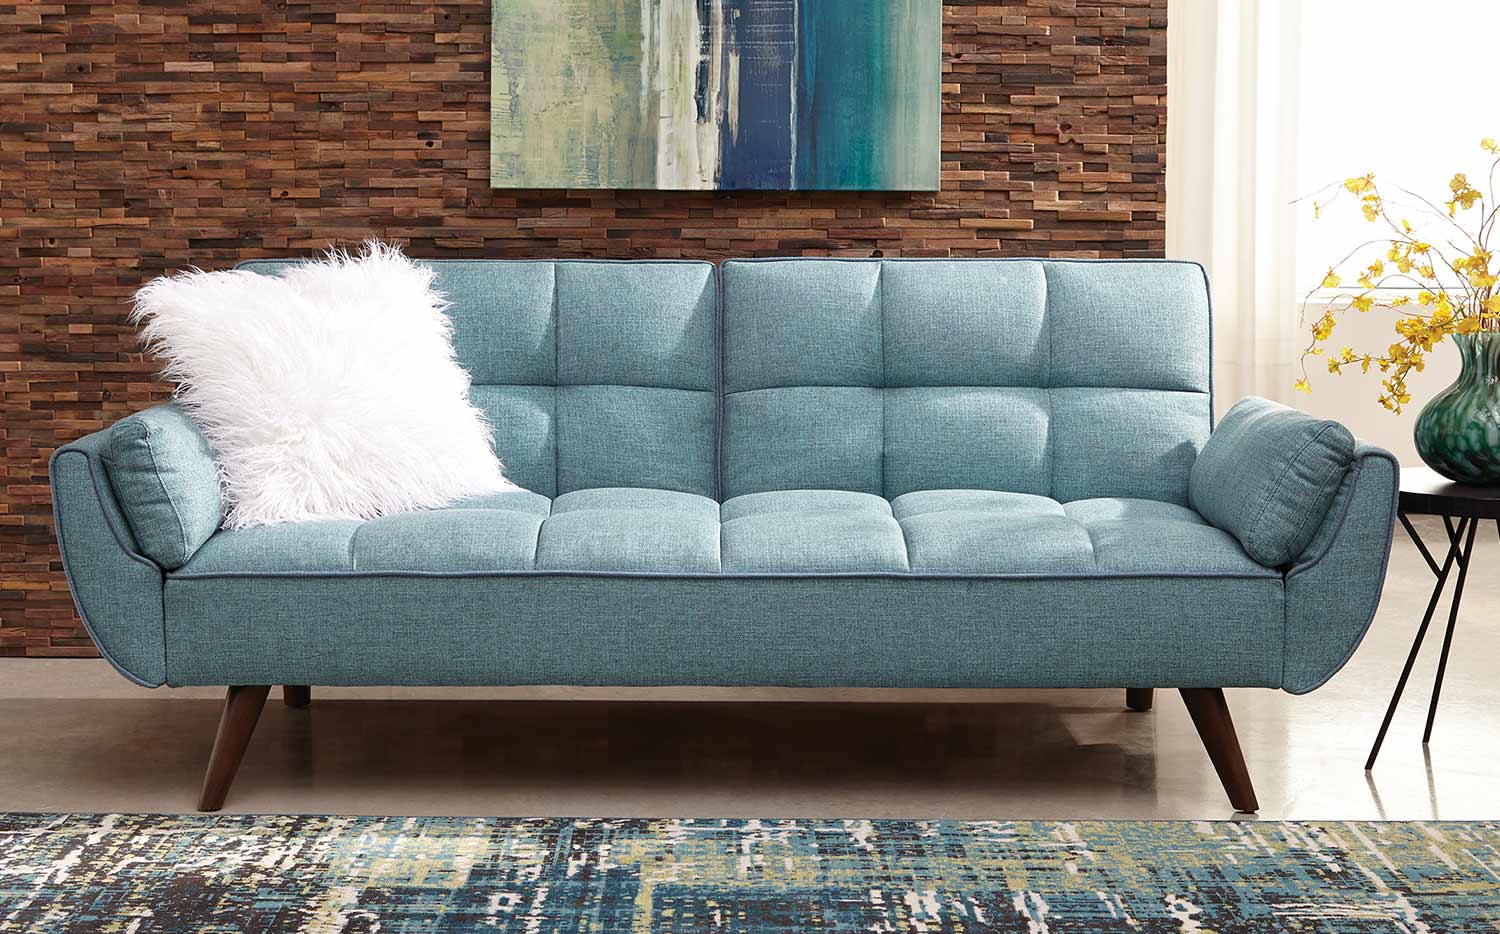 Coaster Cheyenne Sofa Bed - Turquoise Blue